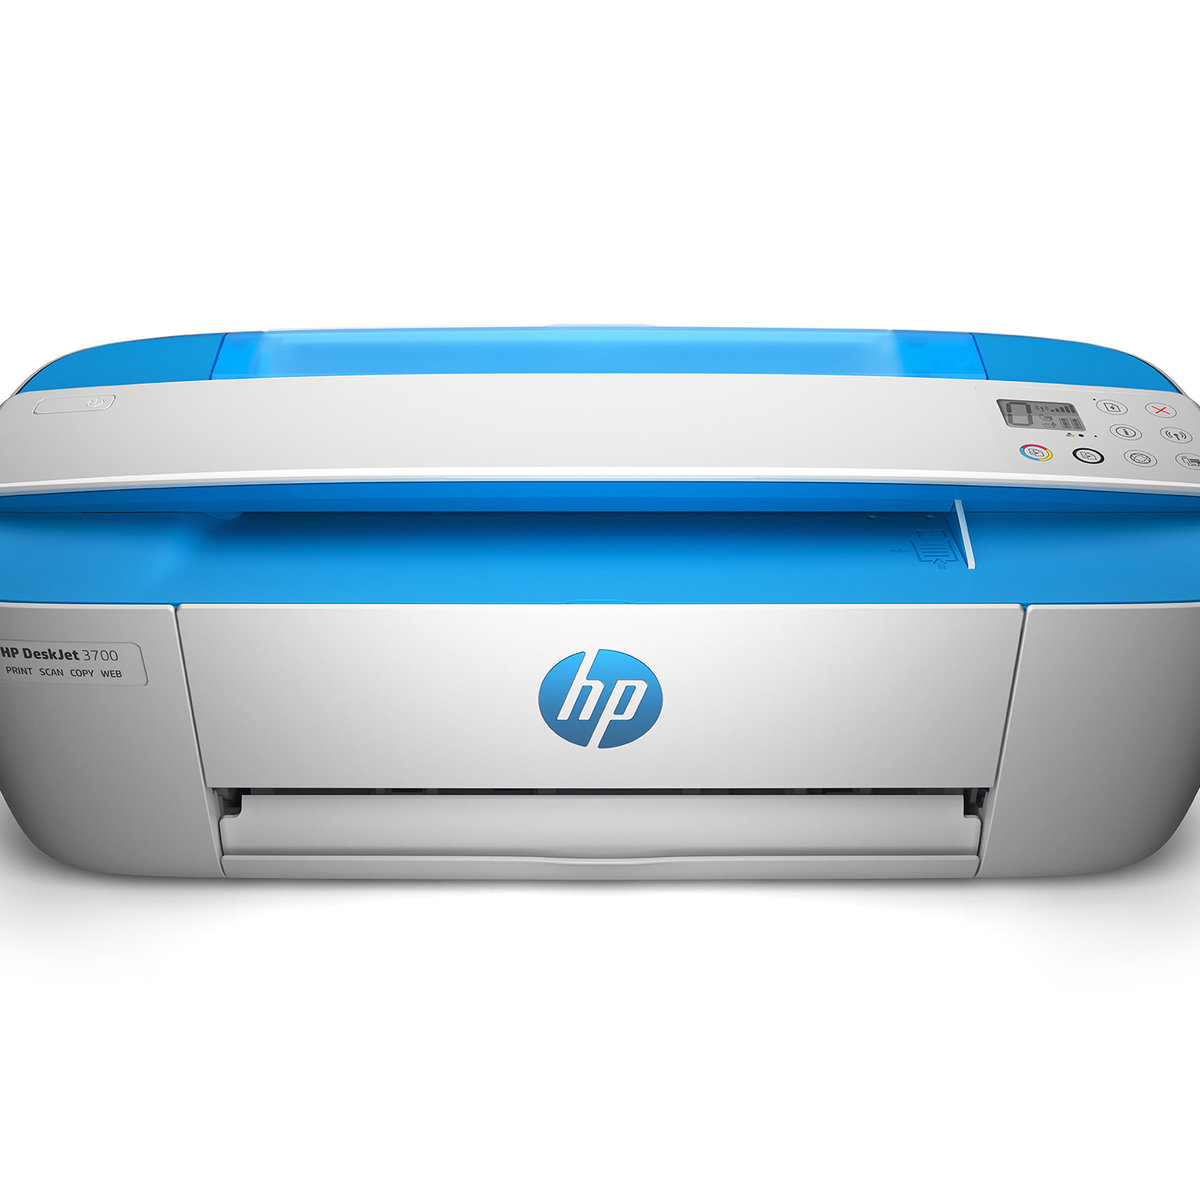 HP DeskJet Ink Advantage 3775